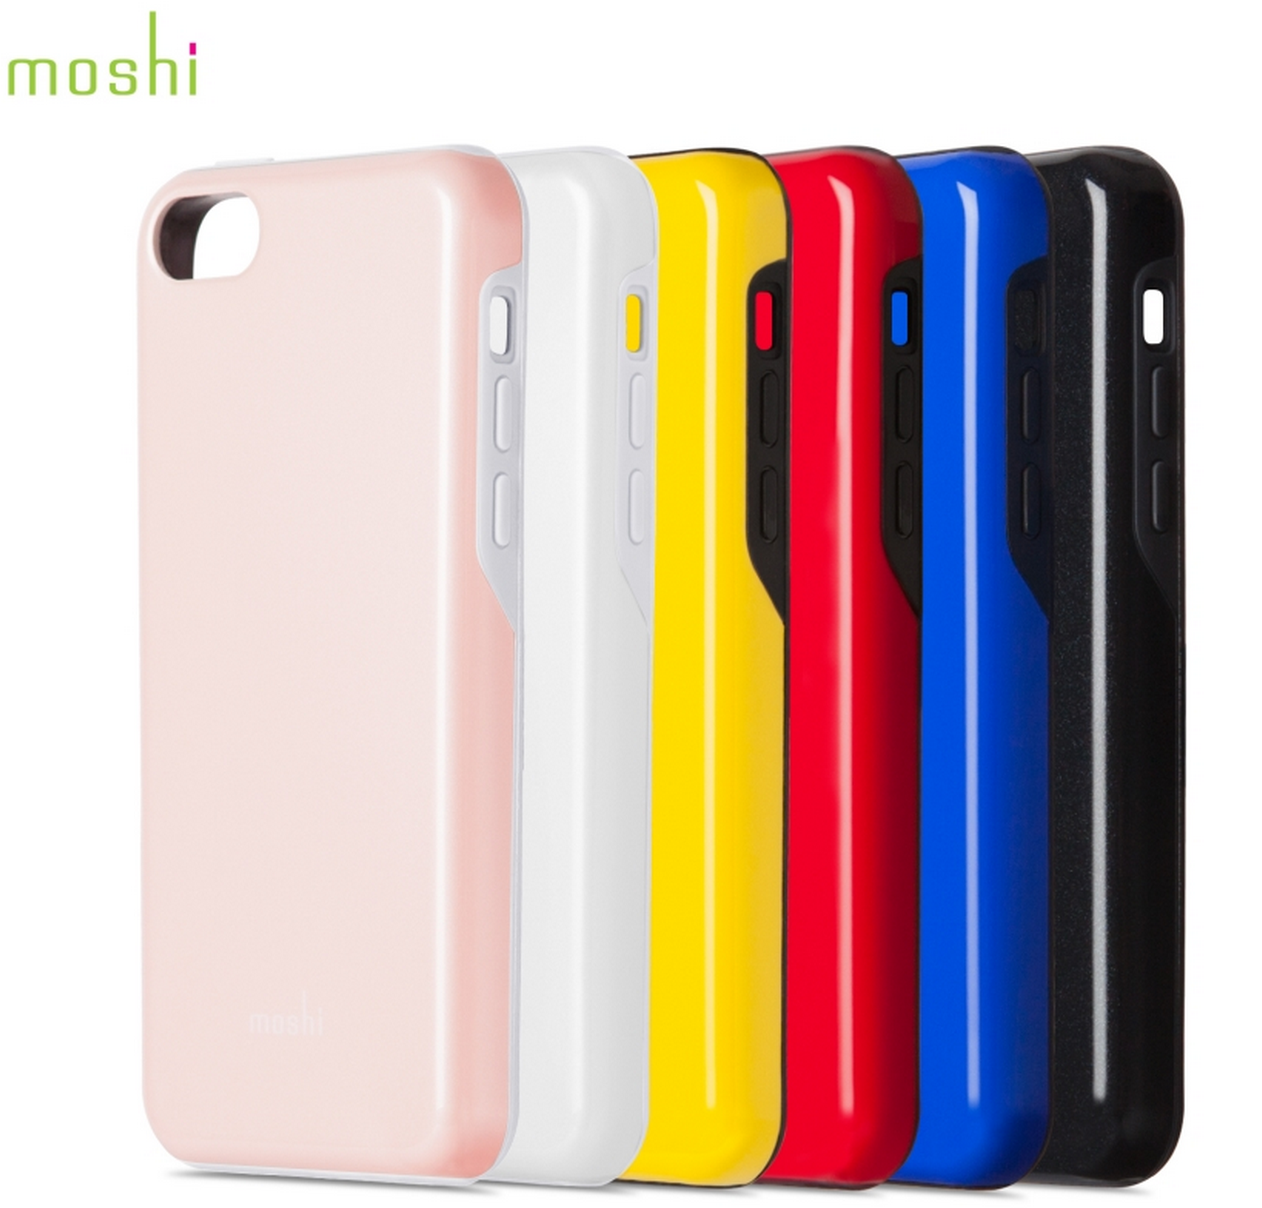 iGlaze-Remix-Moshi-iPhone-5c-cases